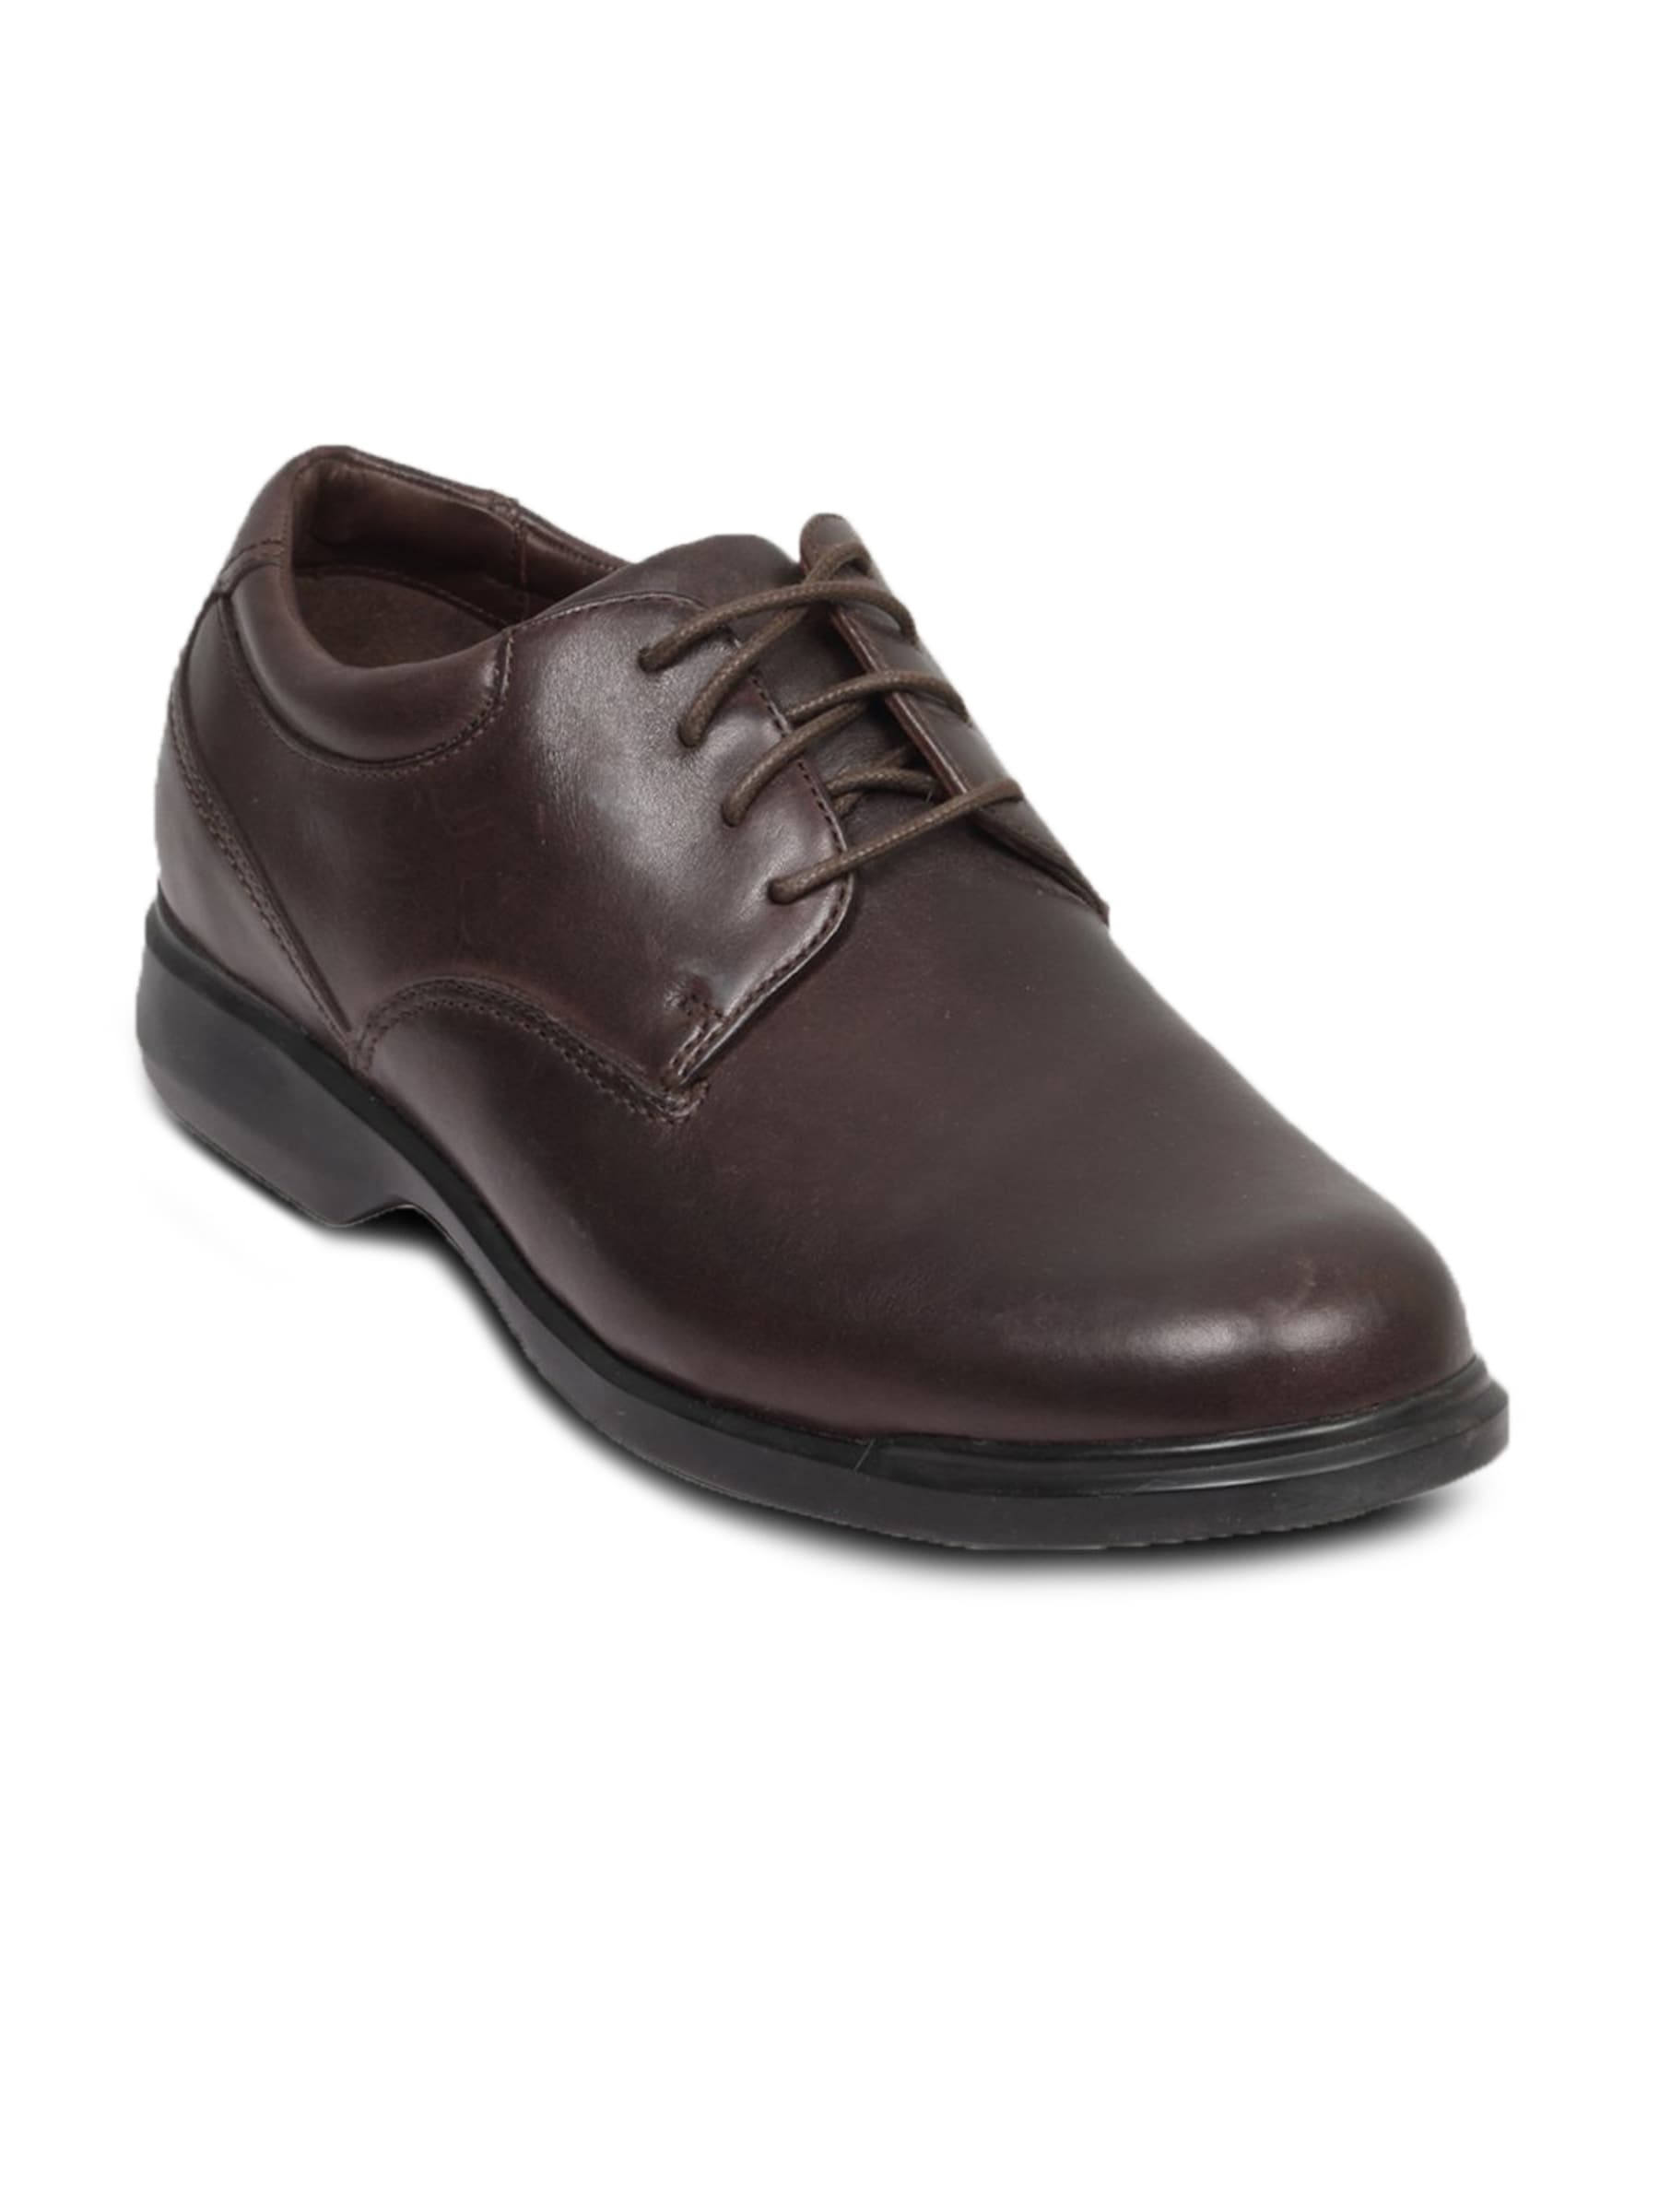 Rockport Men's Ragosta Brown Shoe